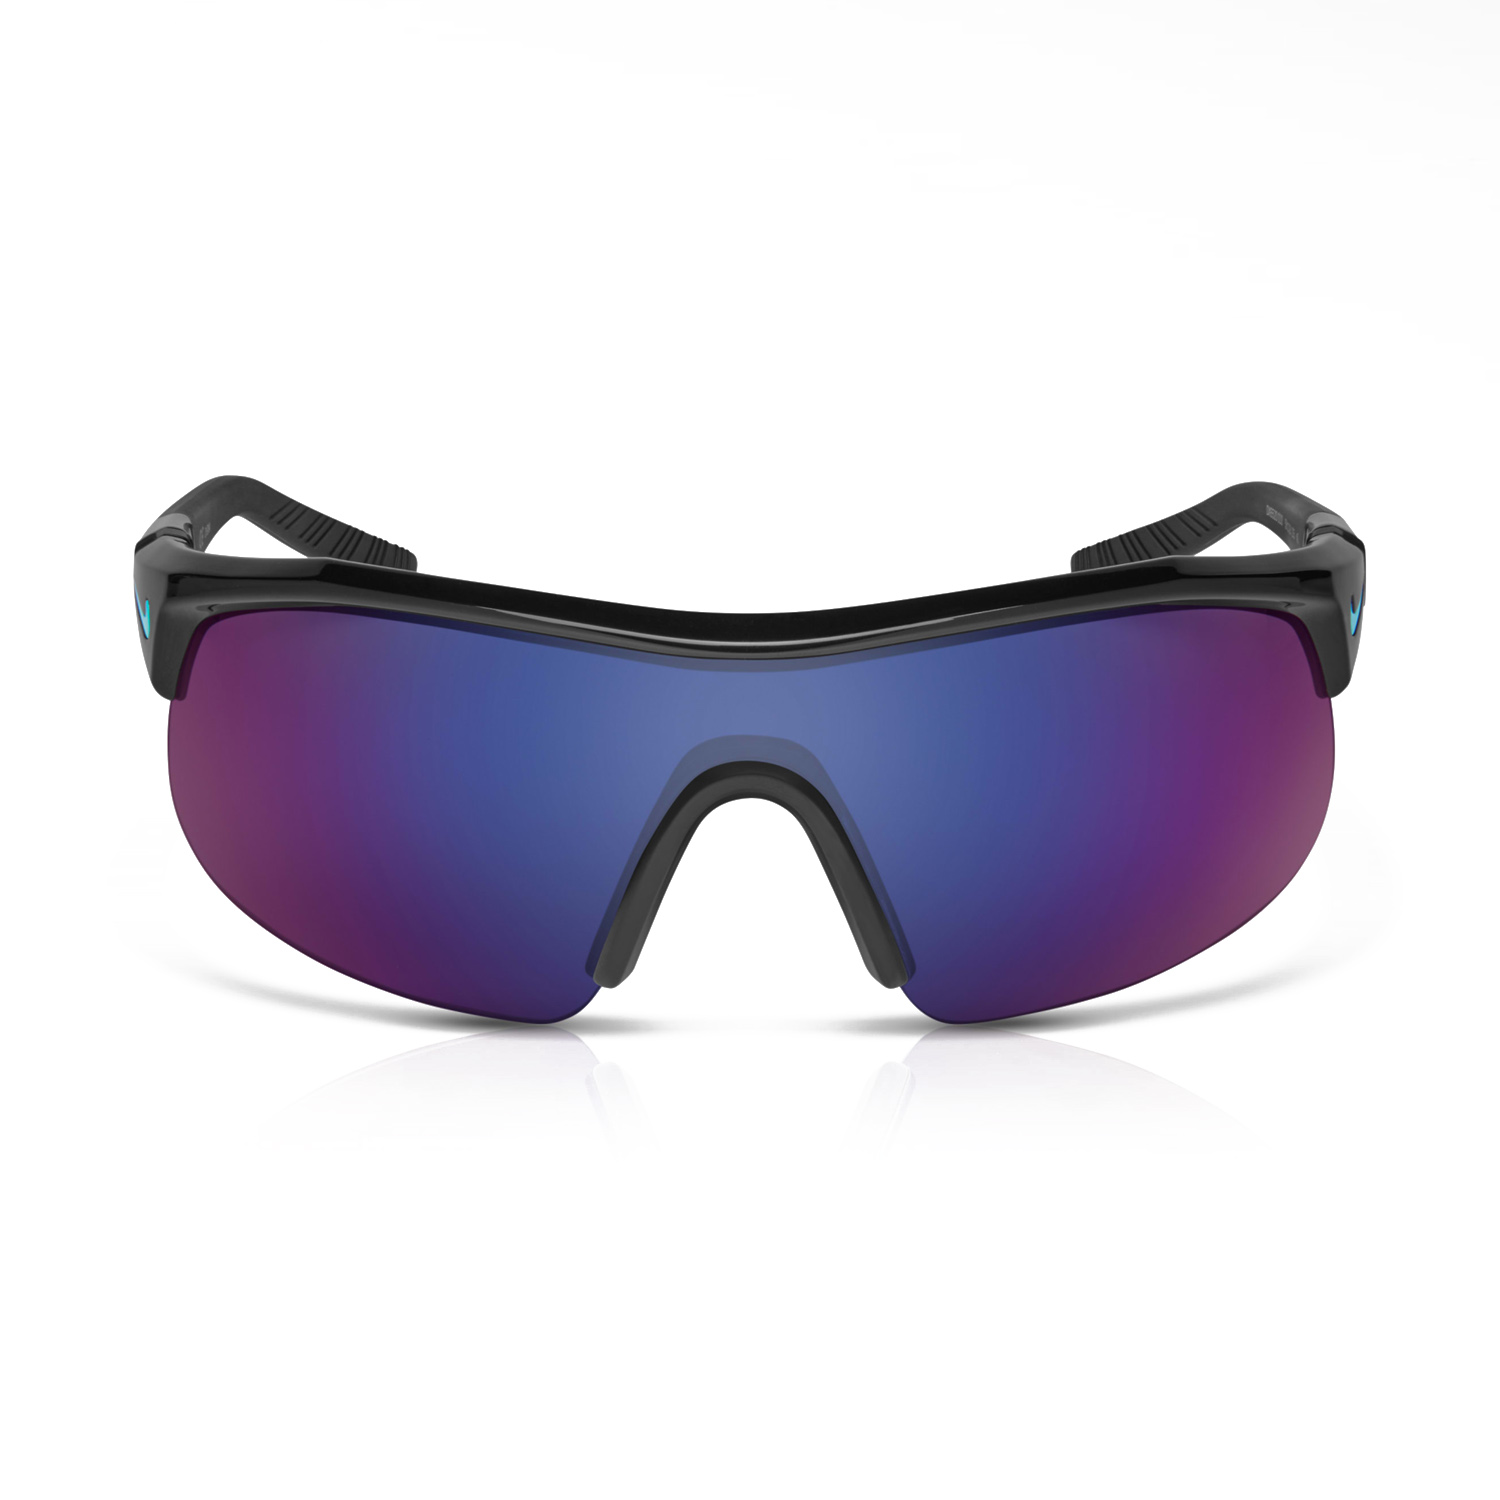 Nike Show X1 Sunglasses - Black/Blue Mirror